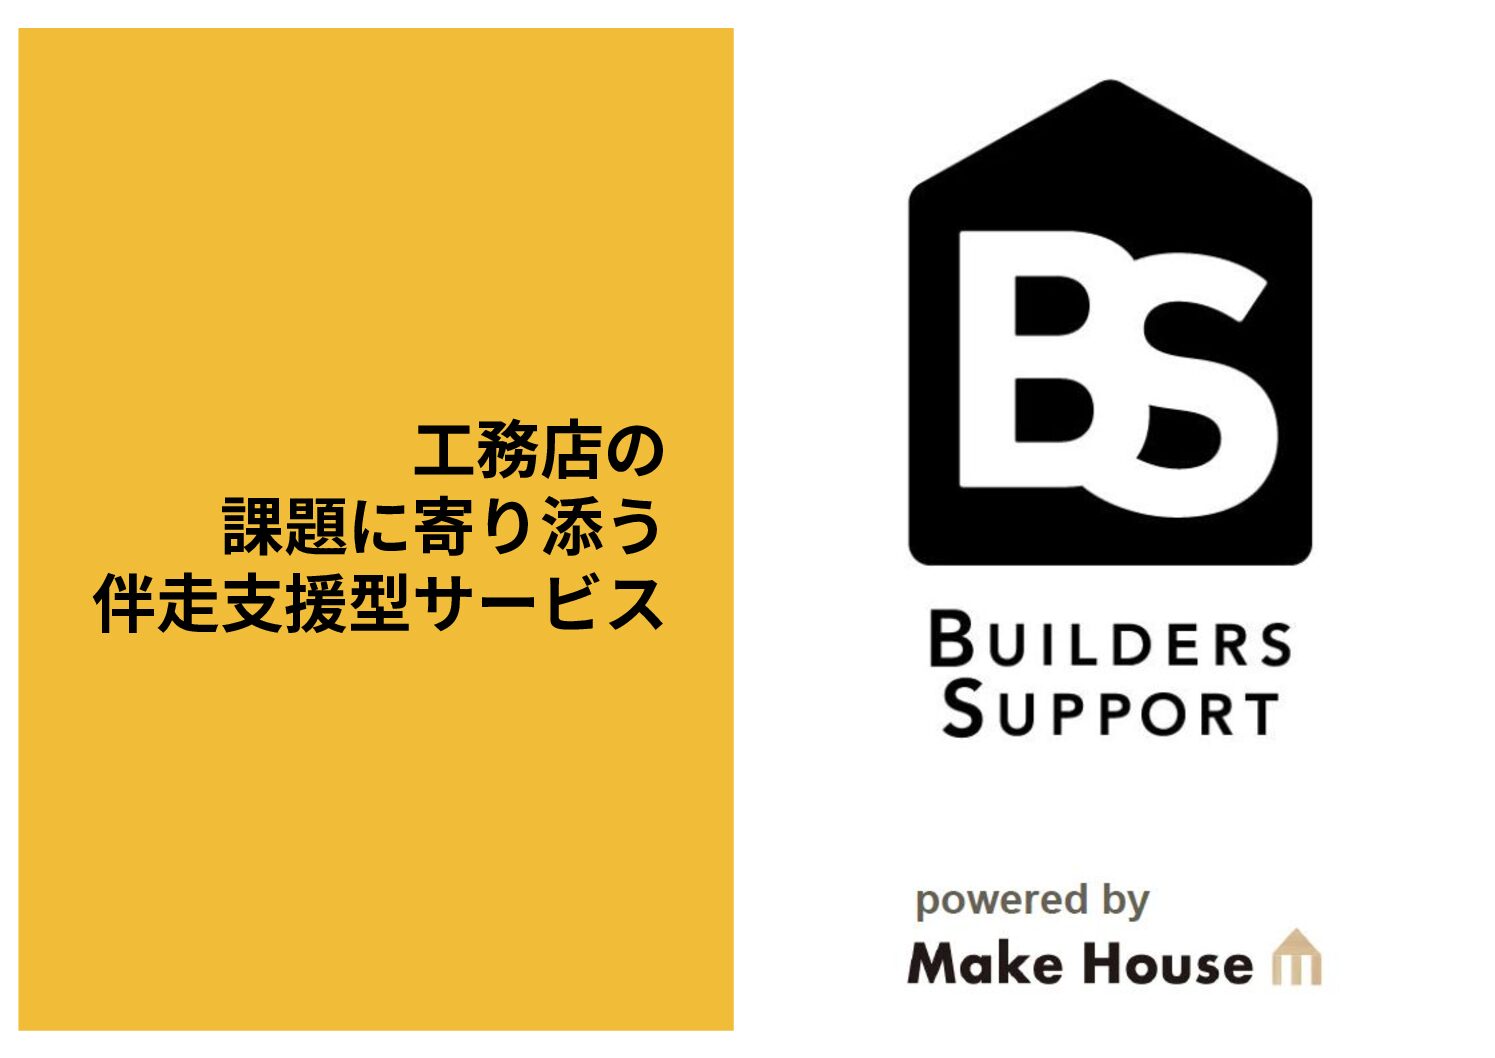 BUILDERS SUPPORT